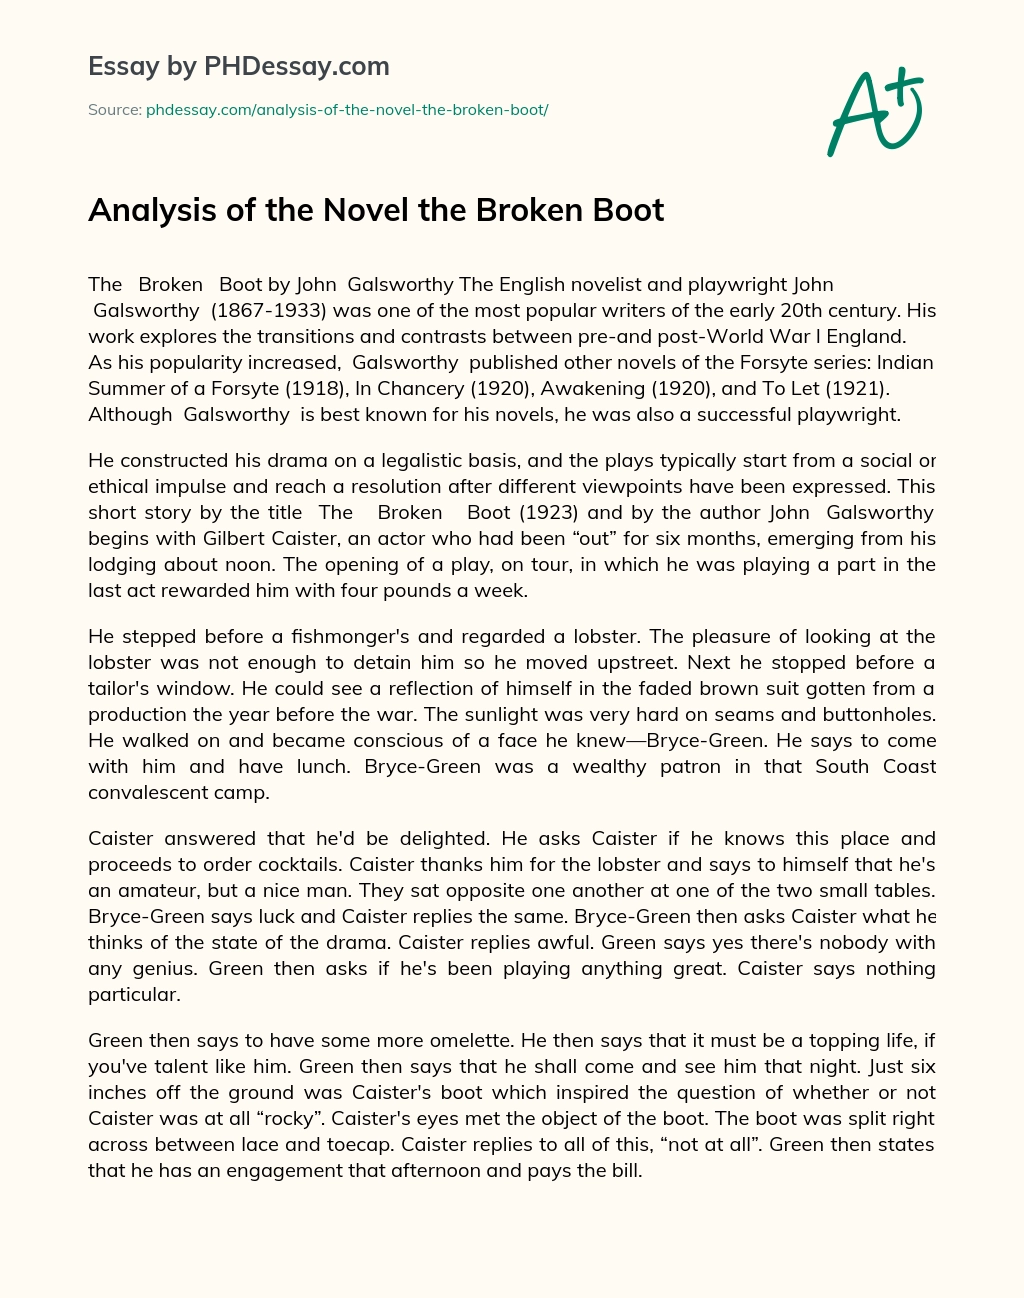 Analysis of the Novel the Broken Boot essay